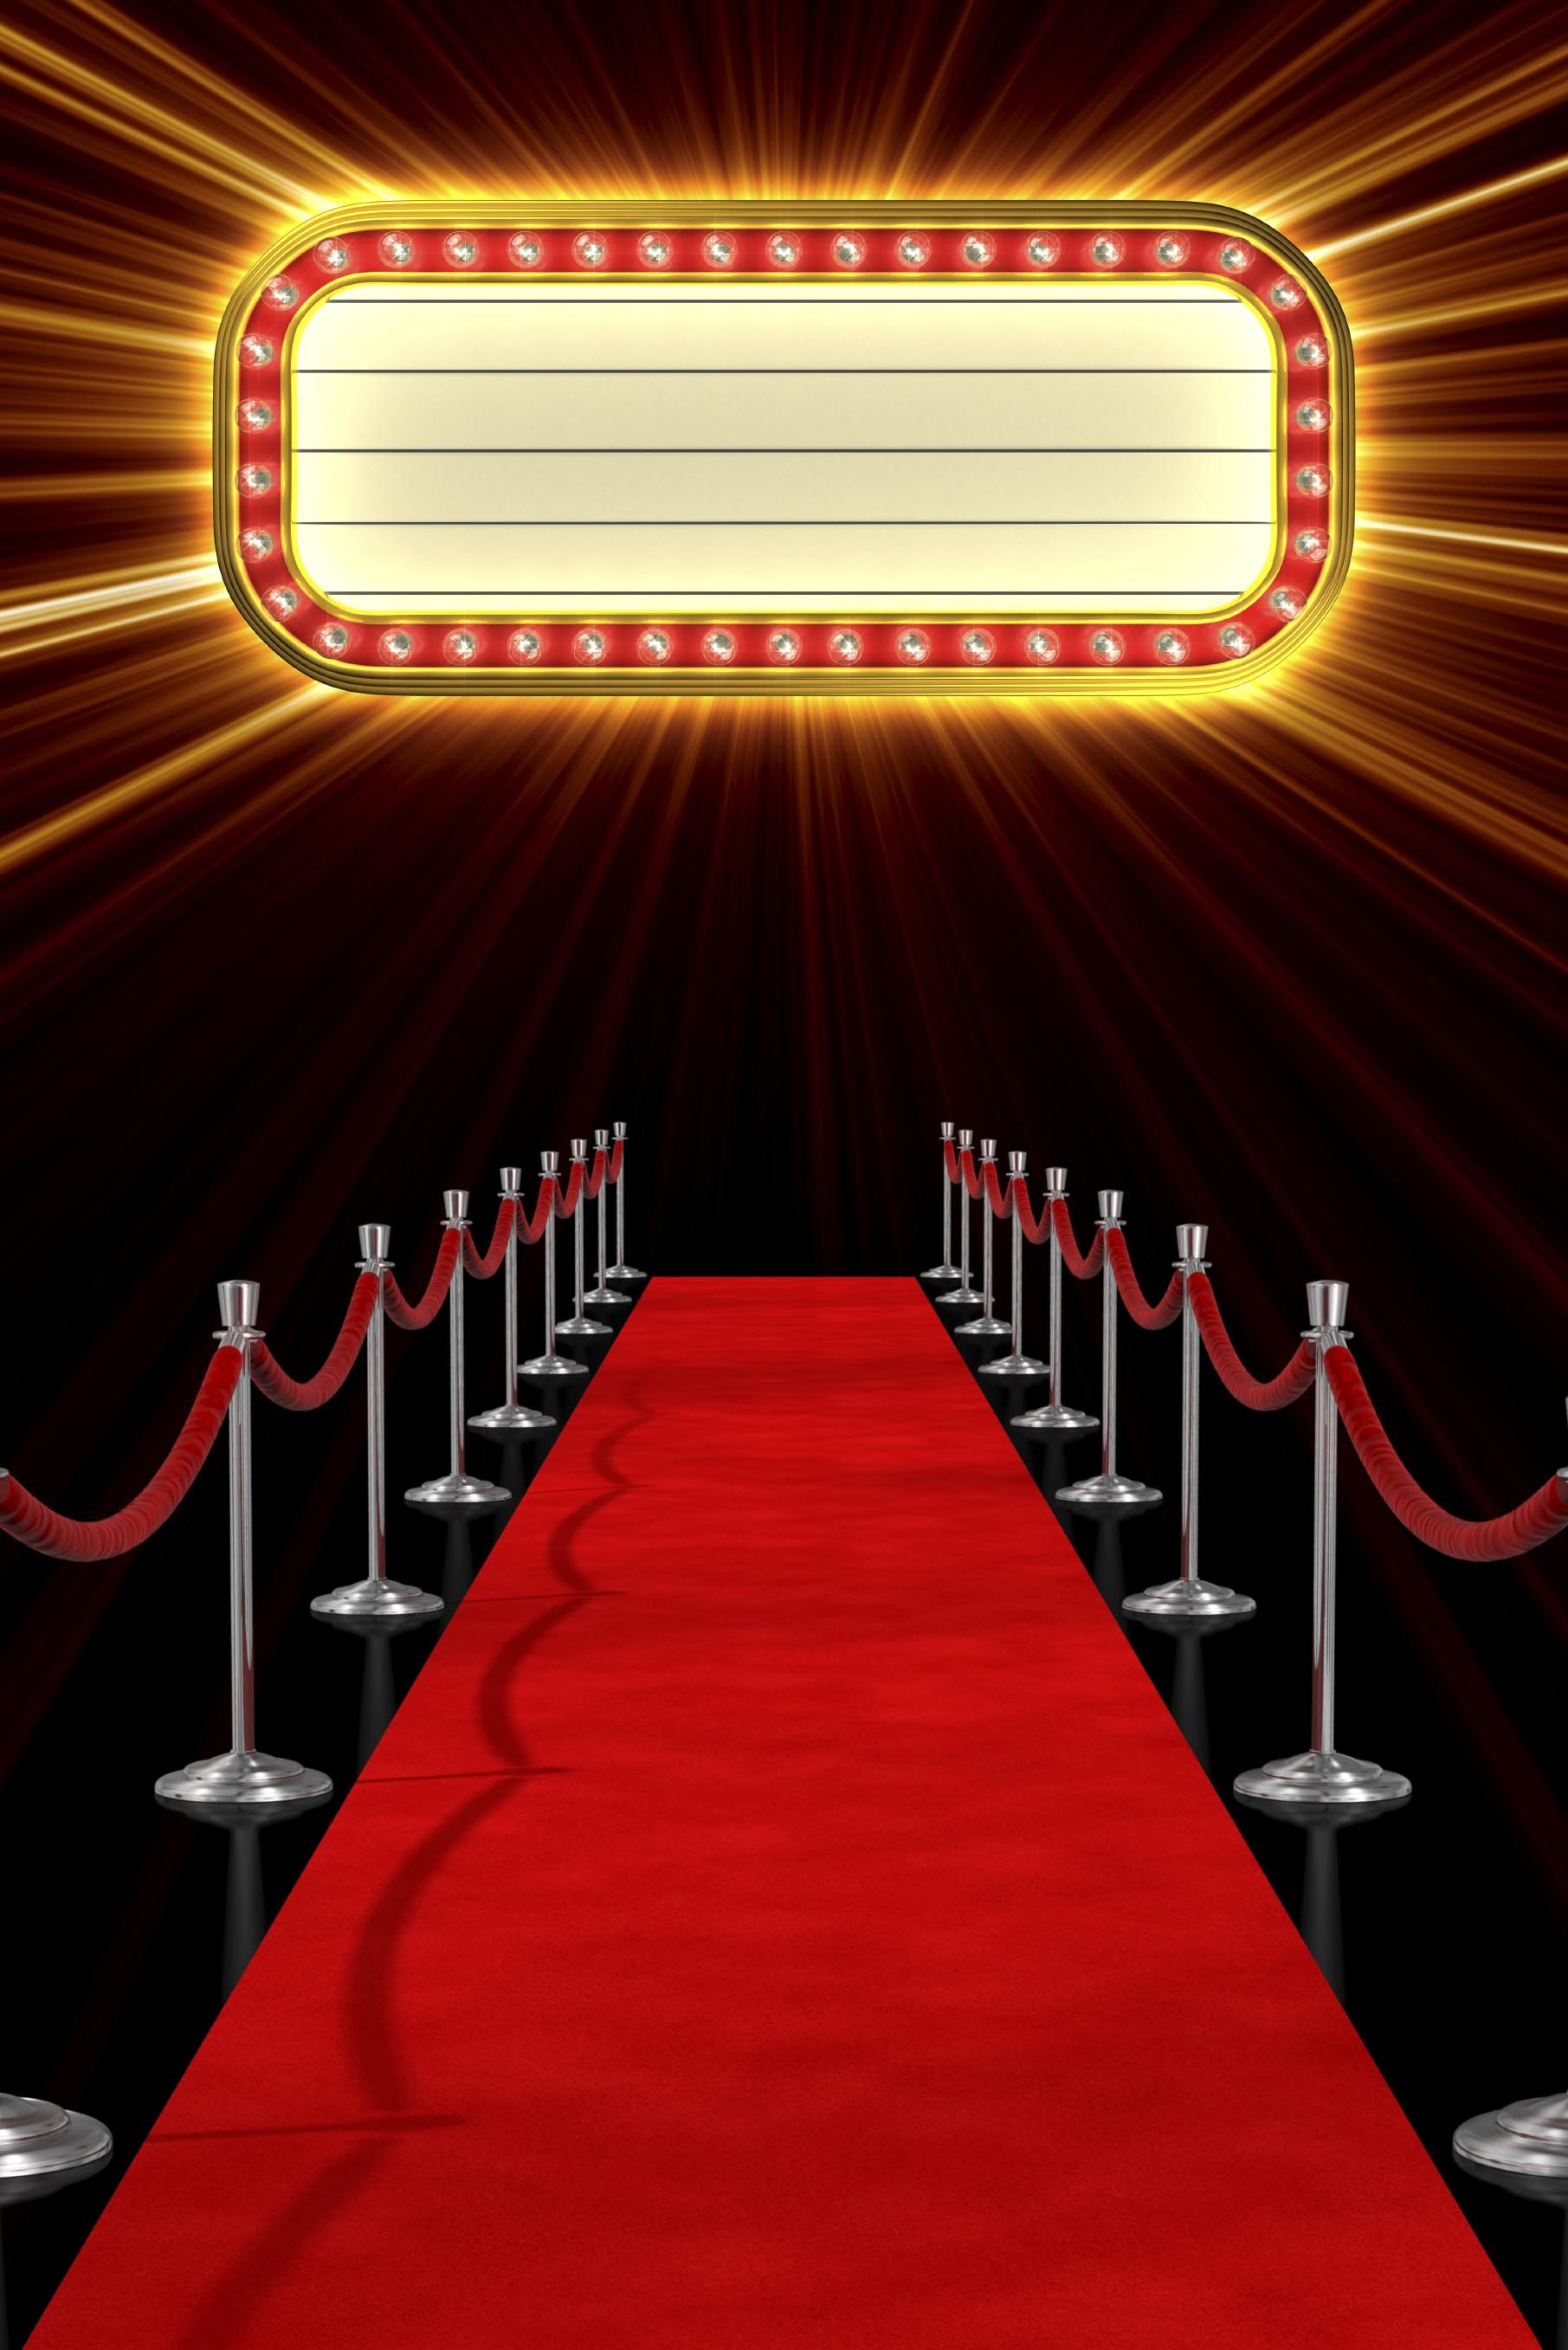 1811x2714 Red Carpet Wallpaper | Red carpet invitations template, Red carpet invitations, Red carpet background